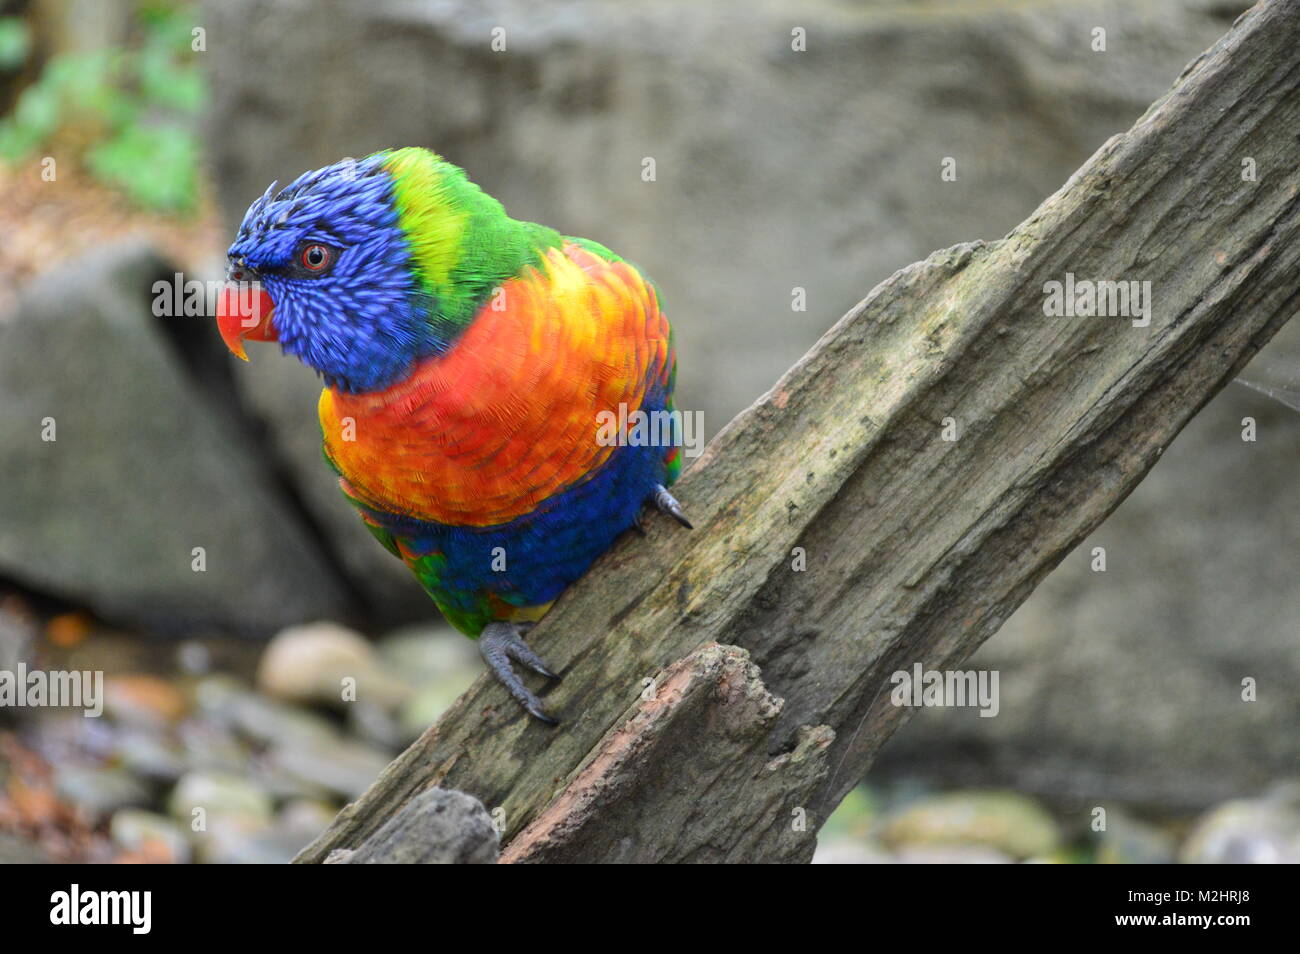 A very colourful bird Stock Photo